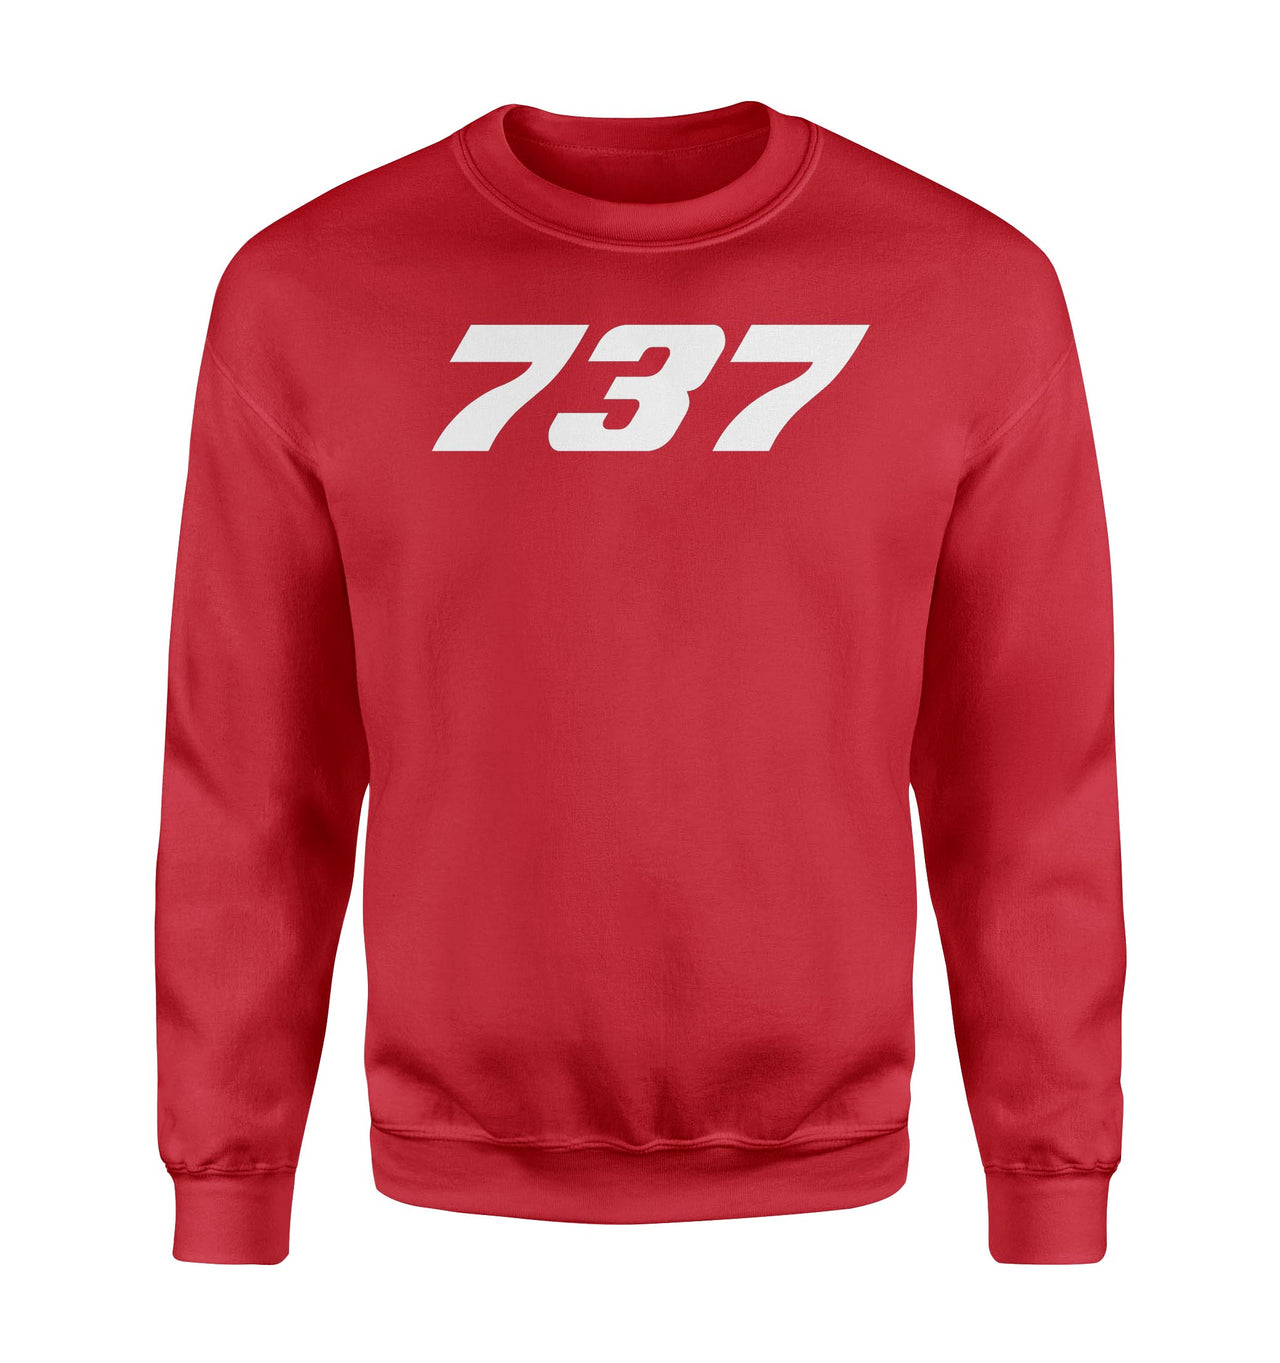 737 Flat Text Designed Sweatshirts